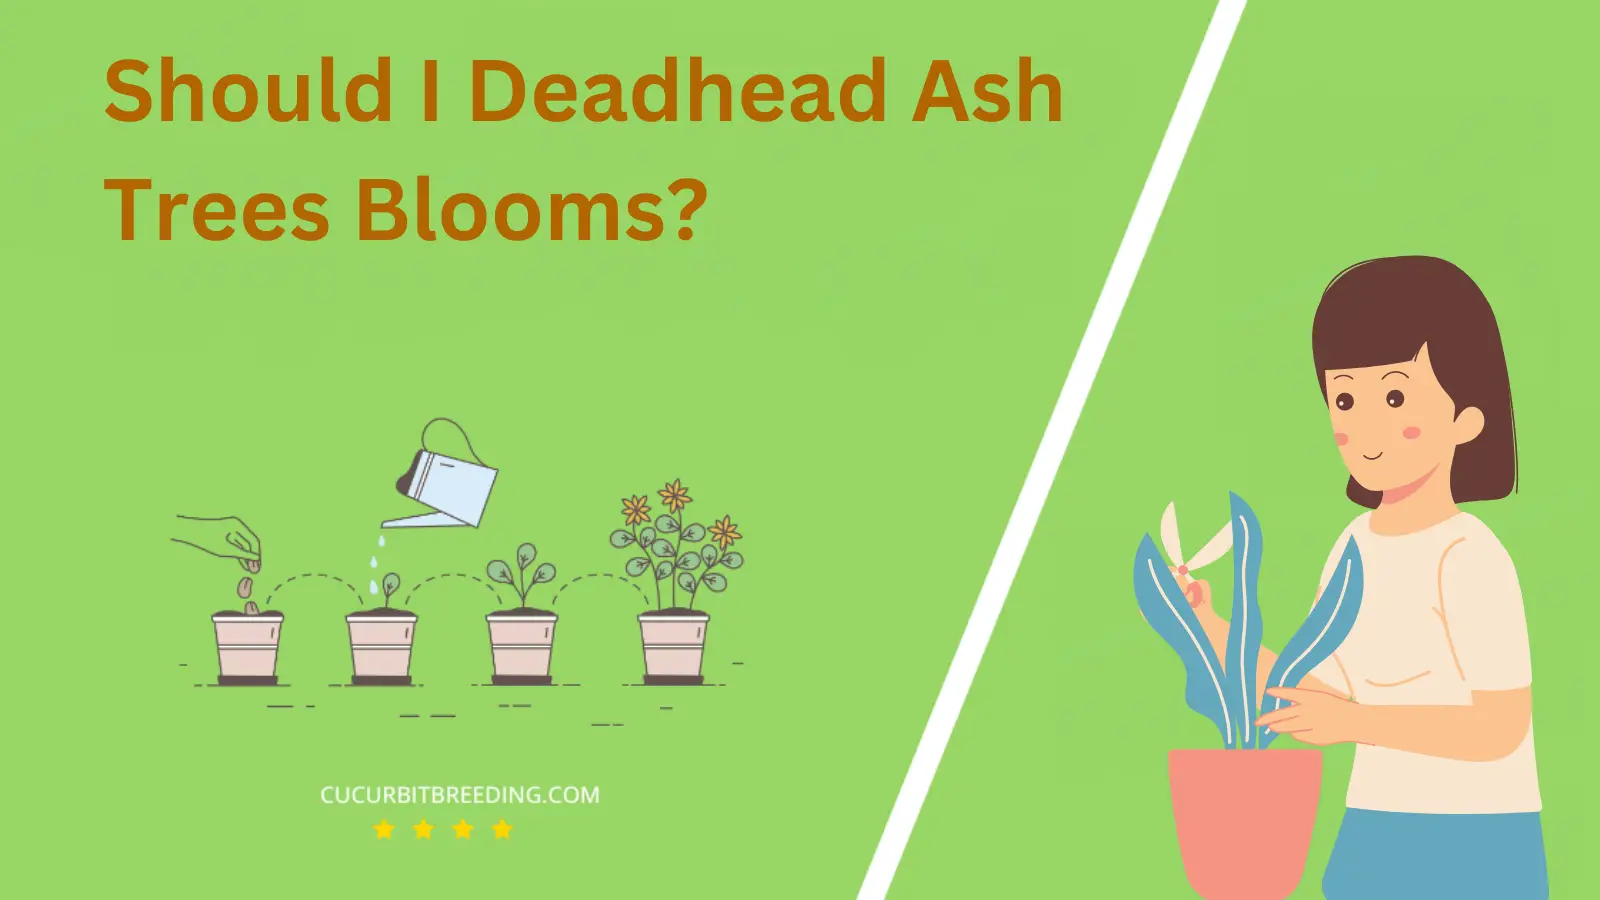 Should I Deadhead Ash Trees Blooms?